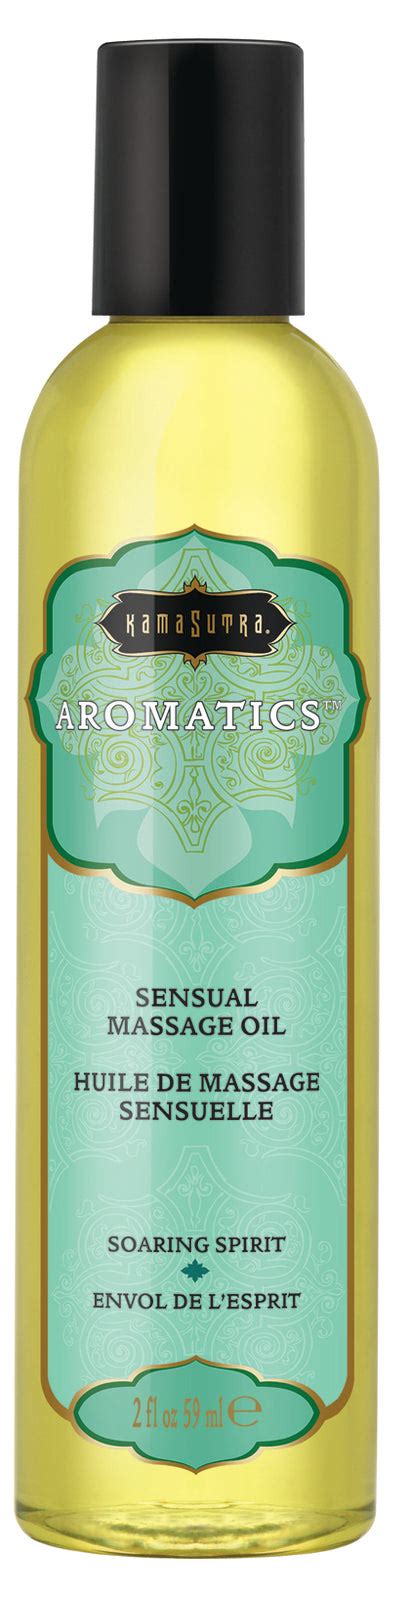 Kama Sutra Aromatics Massage Oil 53 Ml Soaring Spirit 739122102797 Ebay